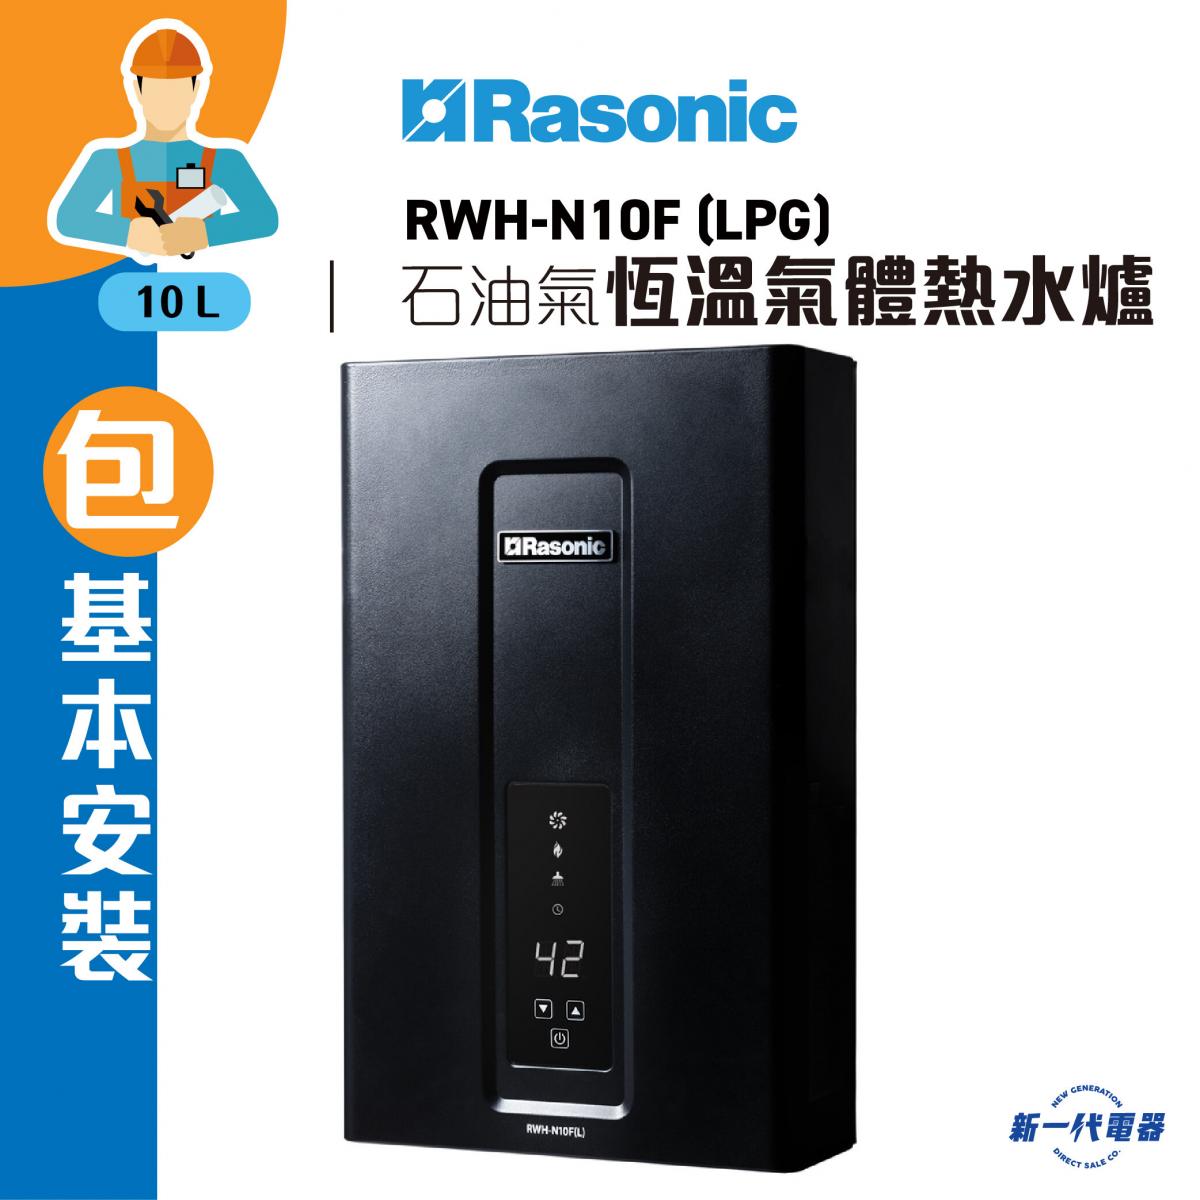 RWHN10F (basic installation)(LPG)(BLACK)  Instantaneous Gas Water Heater (RWH-N10F)